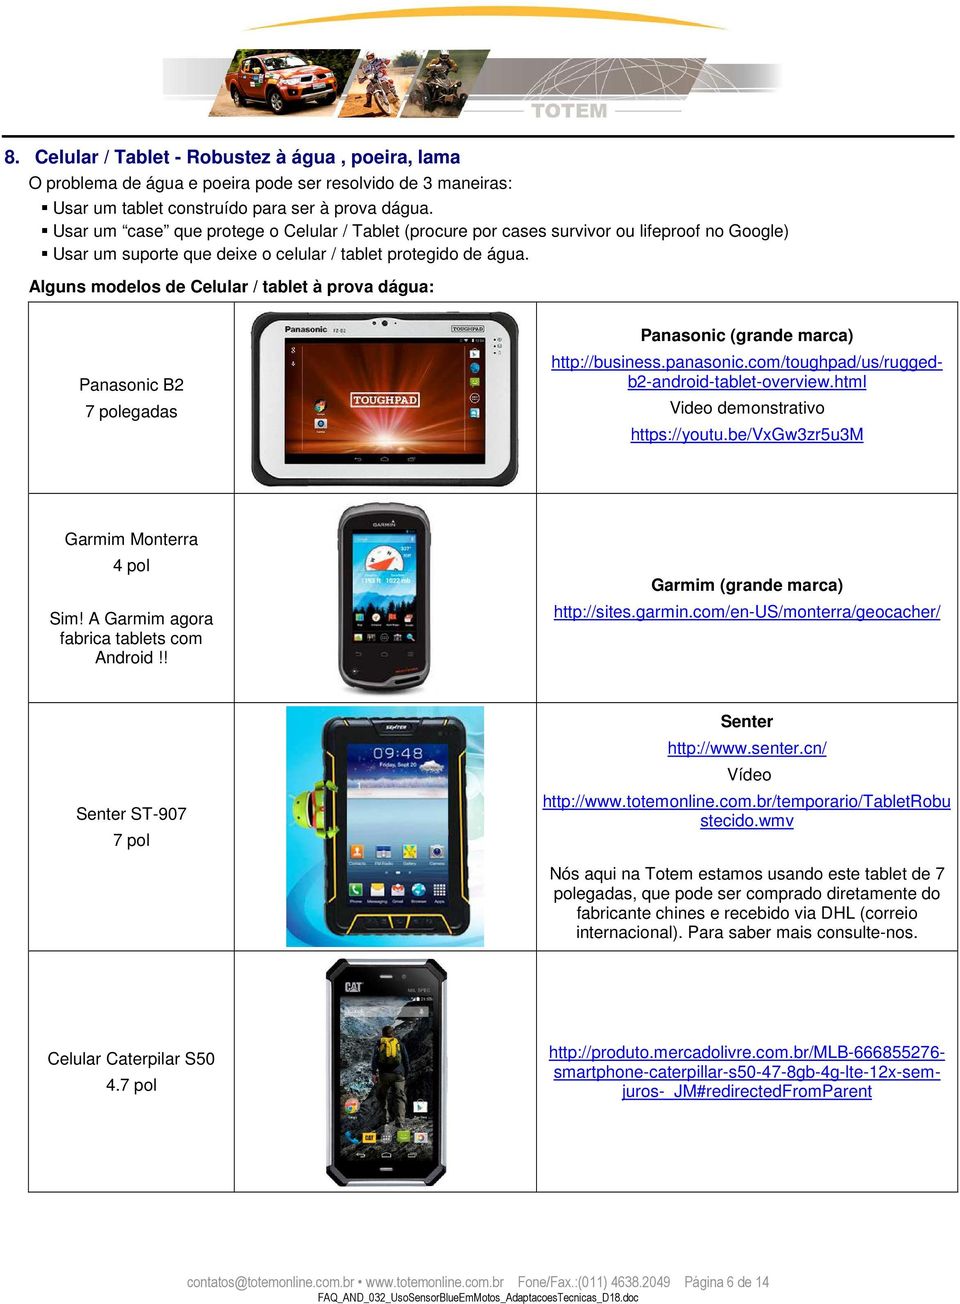 Alguns modelos de Celular / tablet à prova dágua: Panasonic B2 7 polegadas Panasonic (grande marca) Video demonstrativo https://youtu.be/vxgw3zr5u3m Garmim Monterra 4 pol Sim!